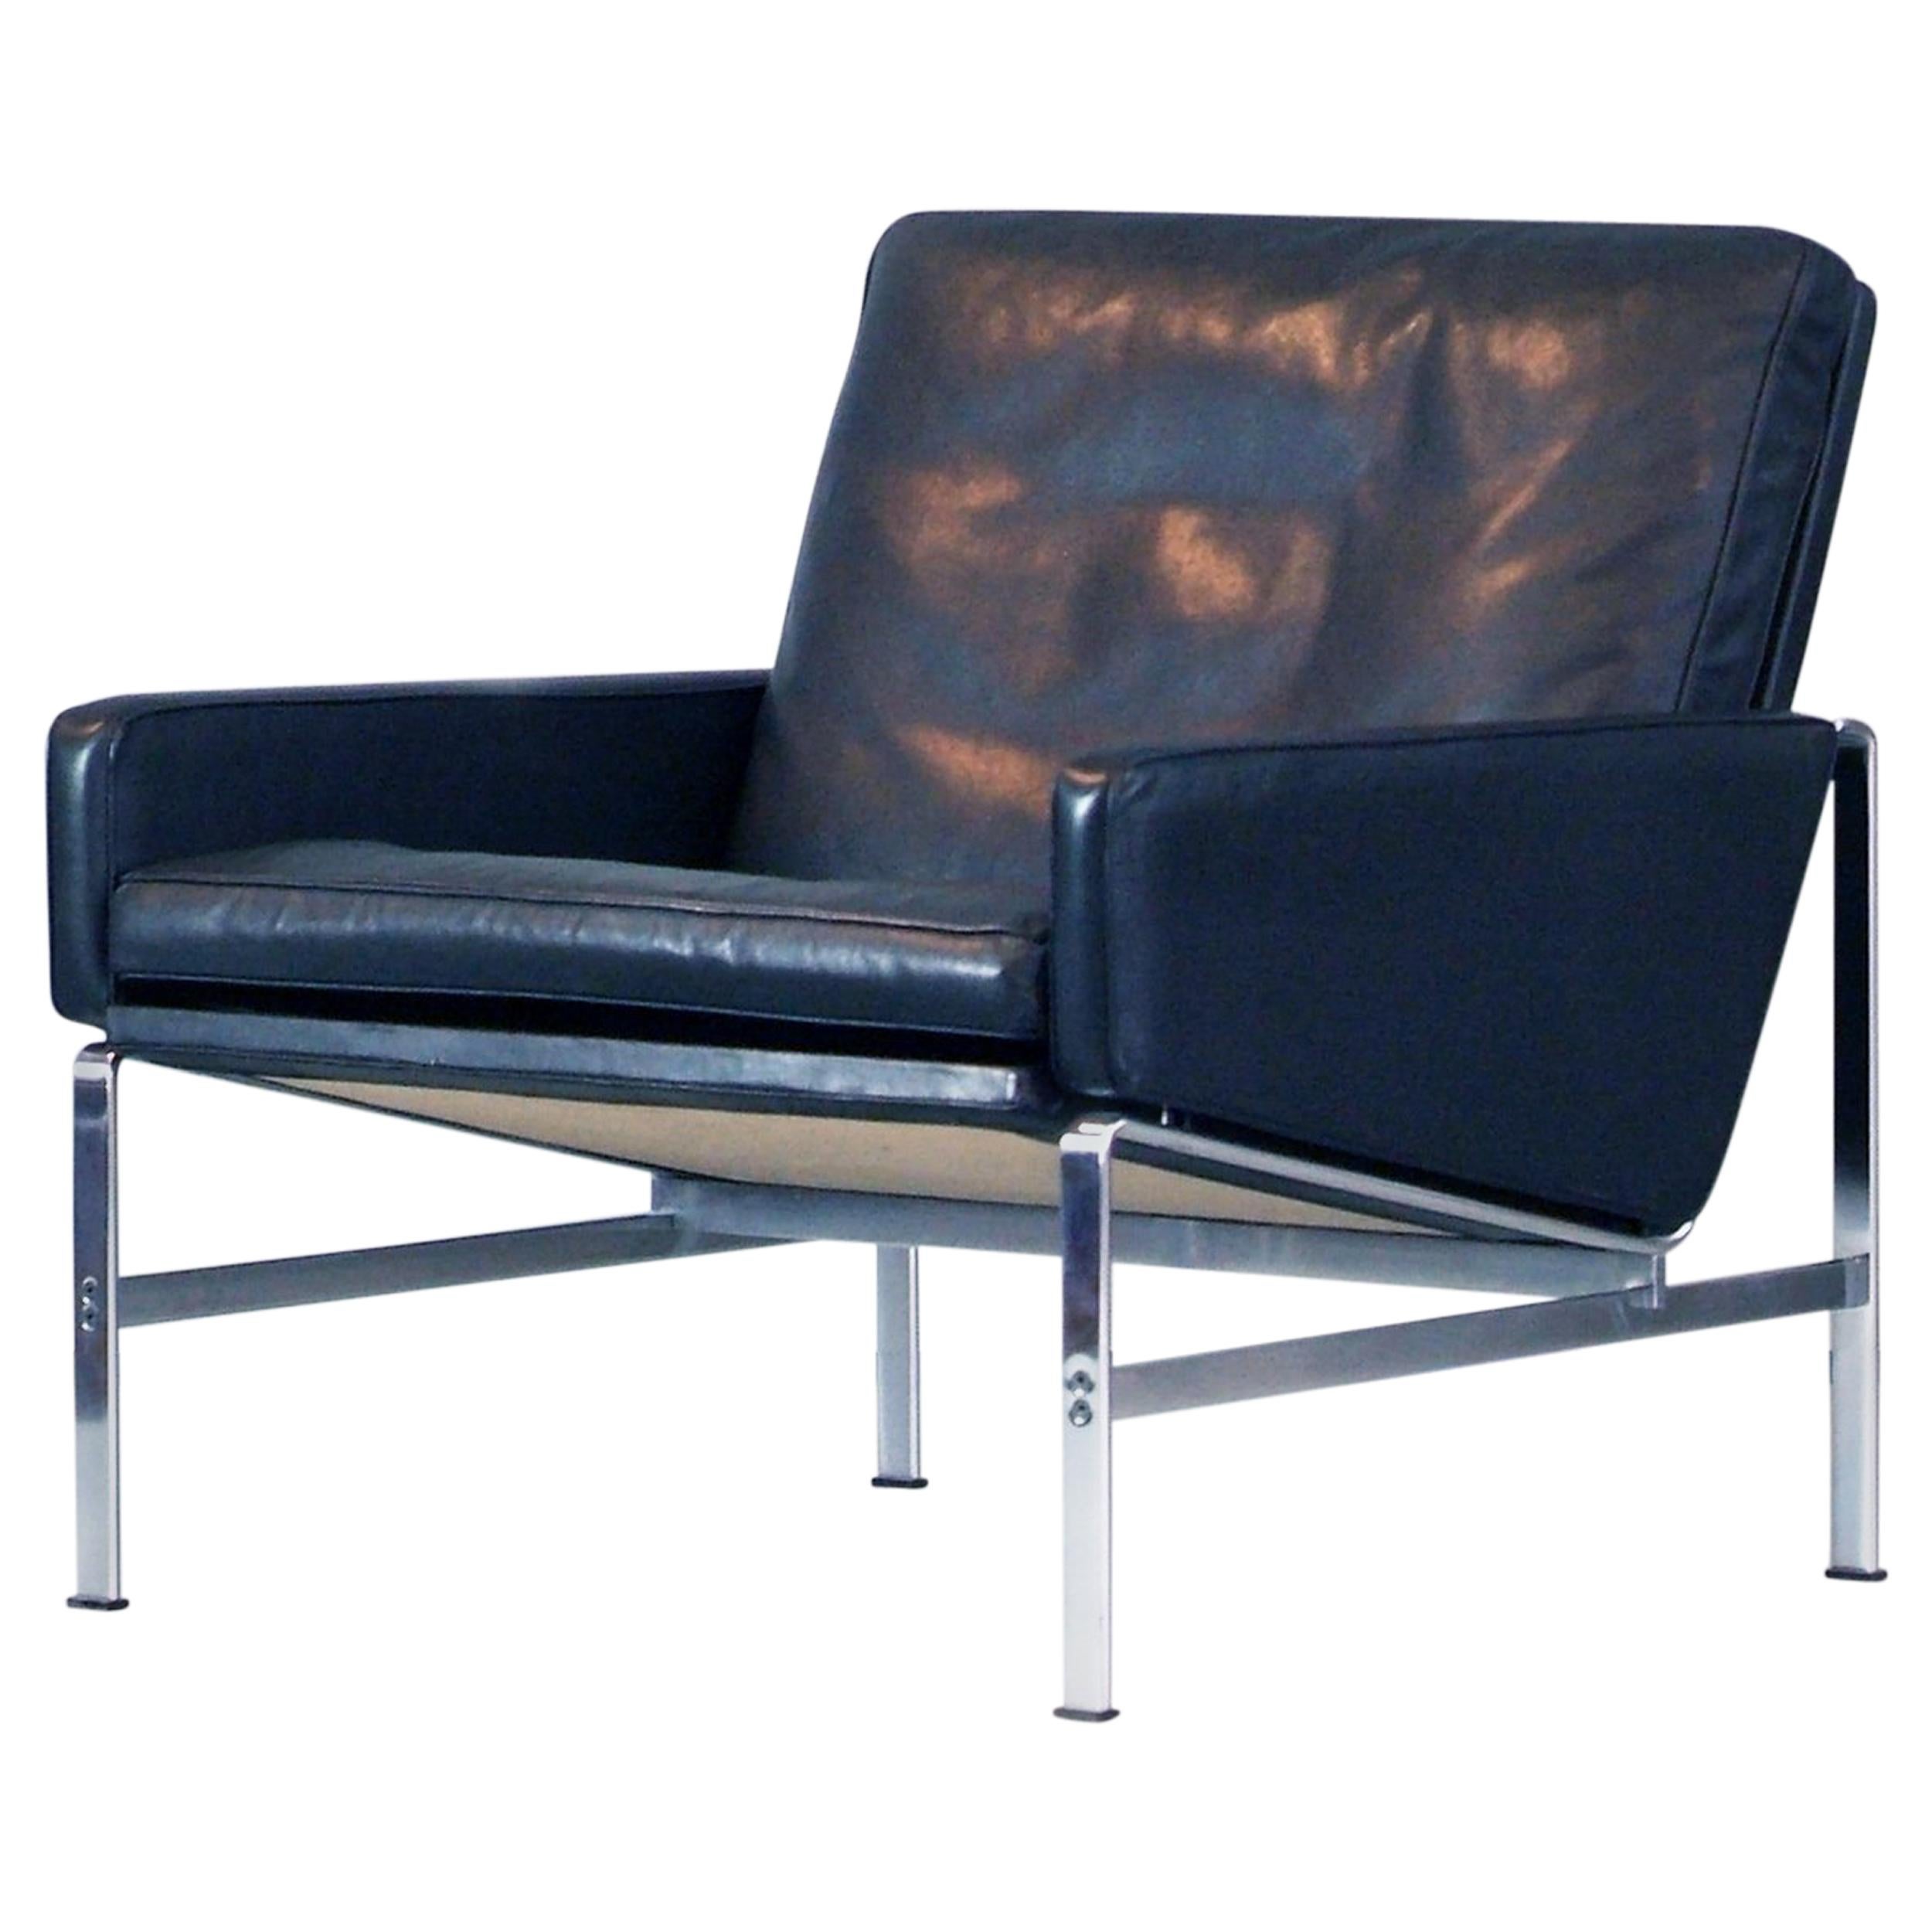 Fabricius Kastholm Easy Chair Mod. 6720 Black Leather Kill International, 1960s